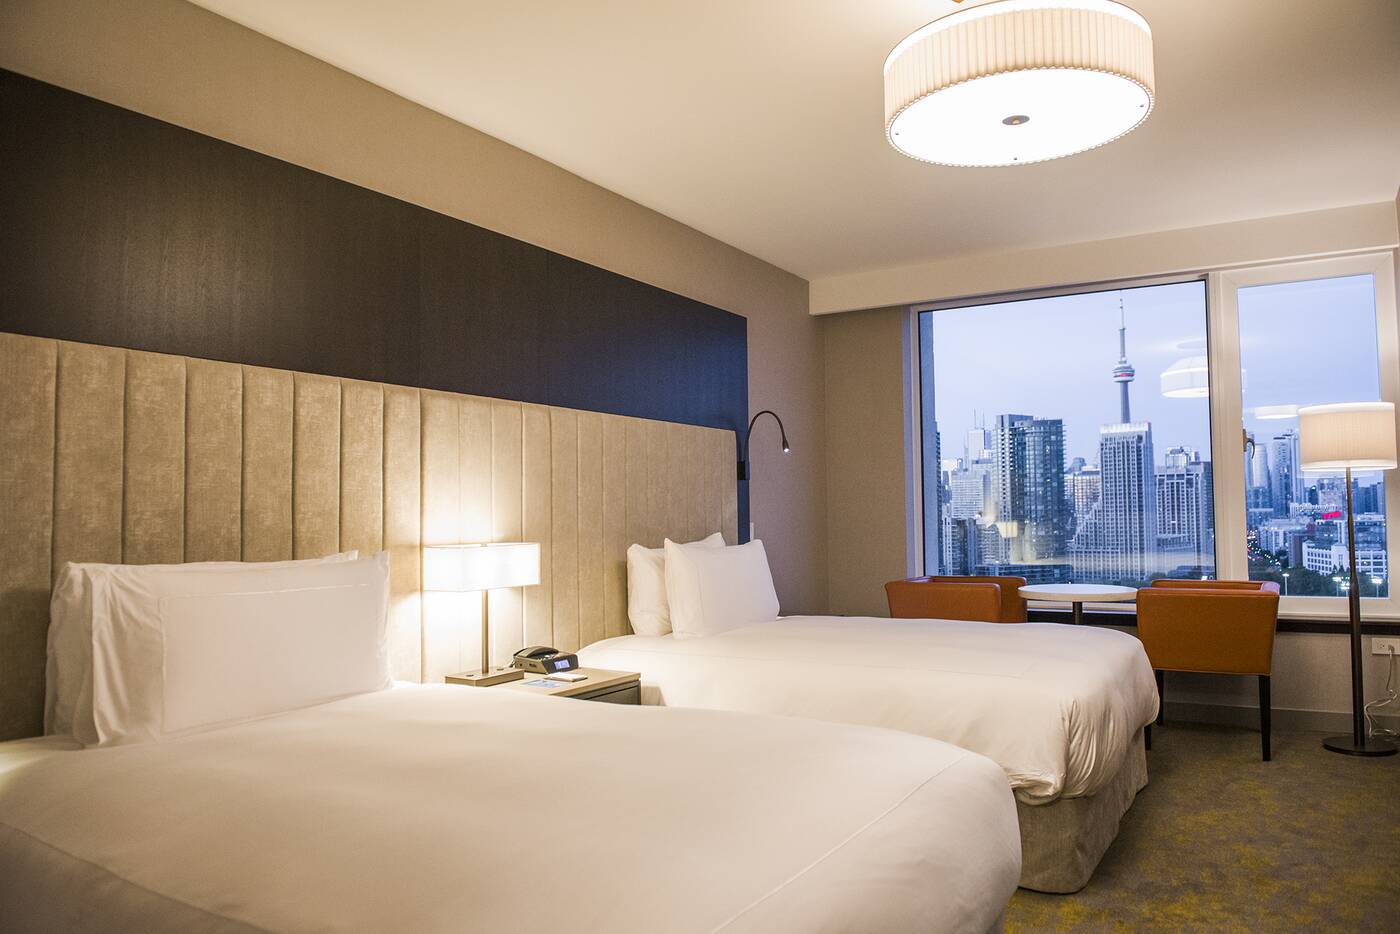 Hotel X Toronto